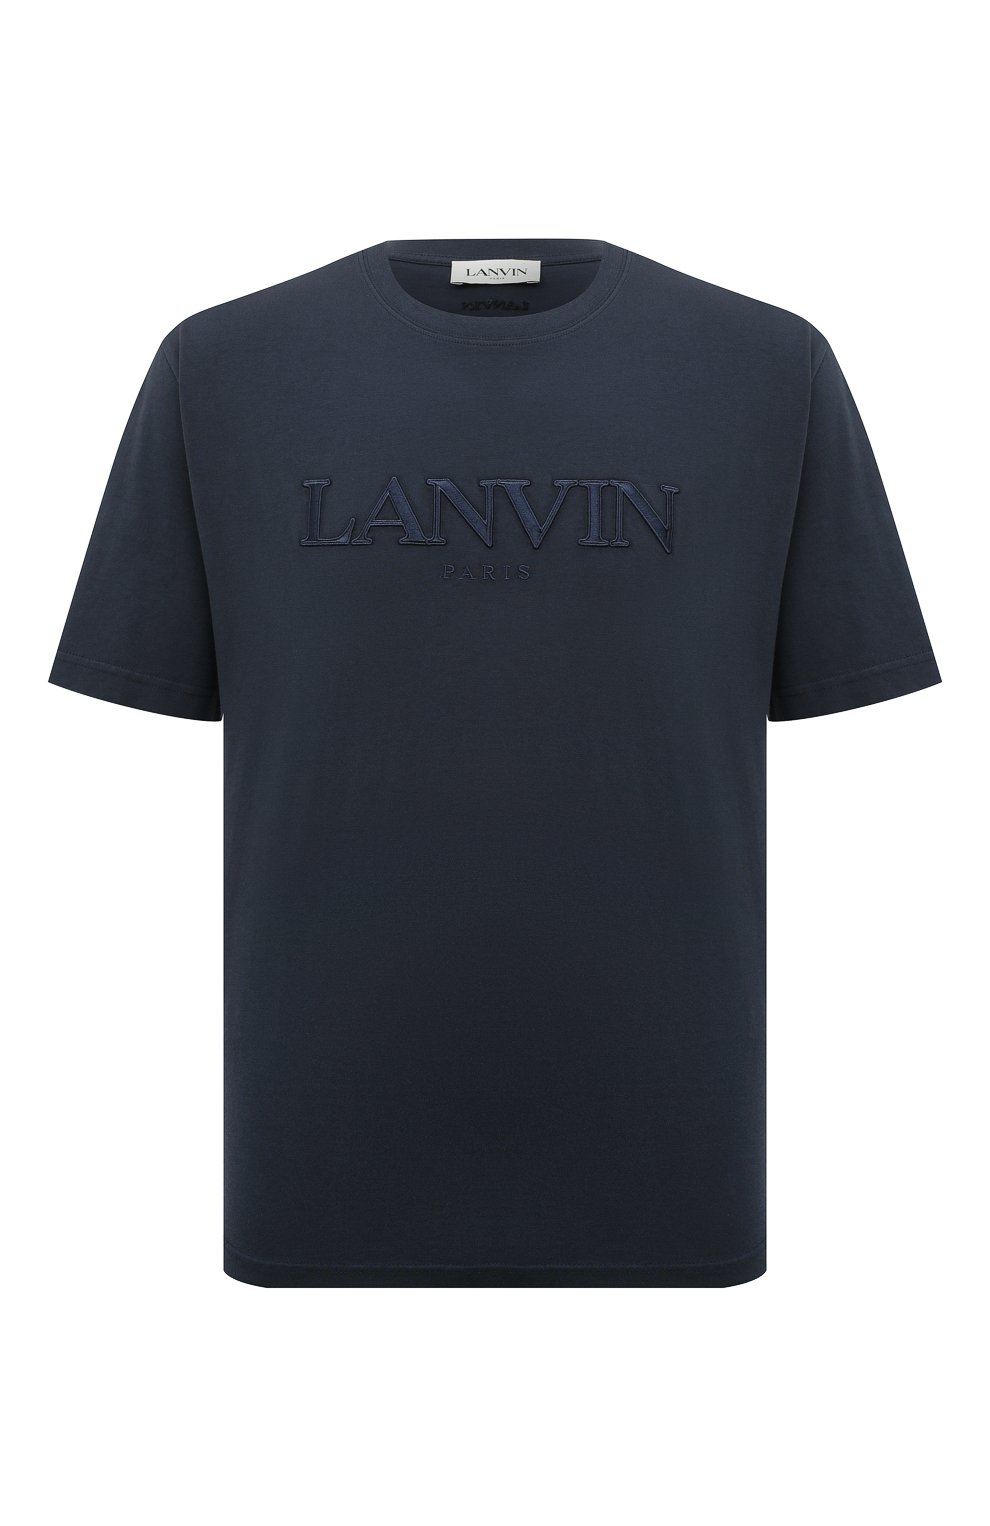 Футболки Lanvin, Хлопковая футболка Lanvin, Португалия, Синий, Хлопок: 100%;, 13377191  - купить